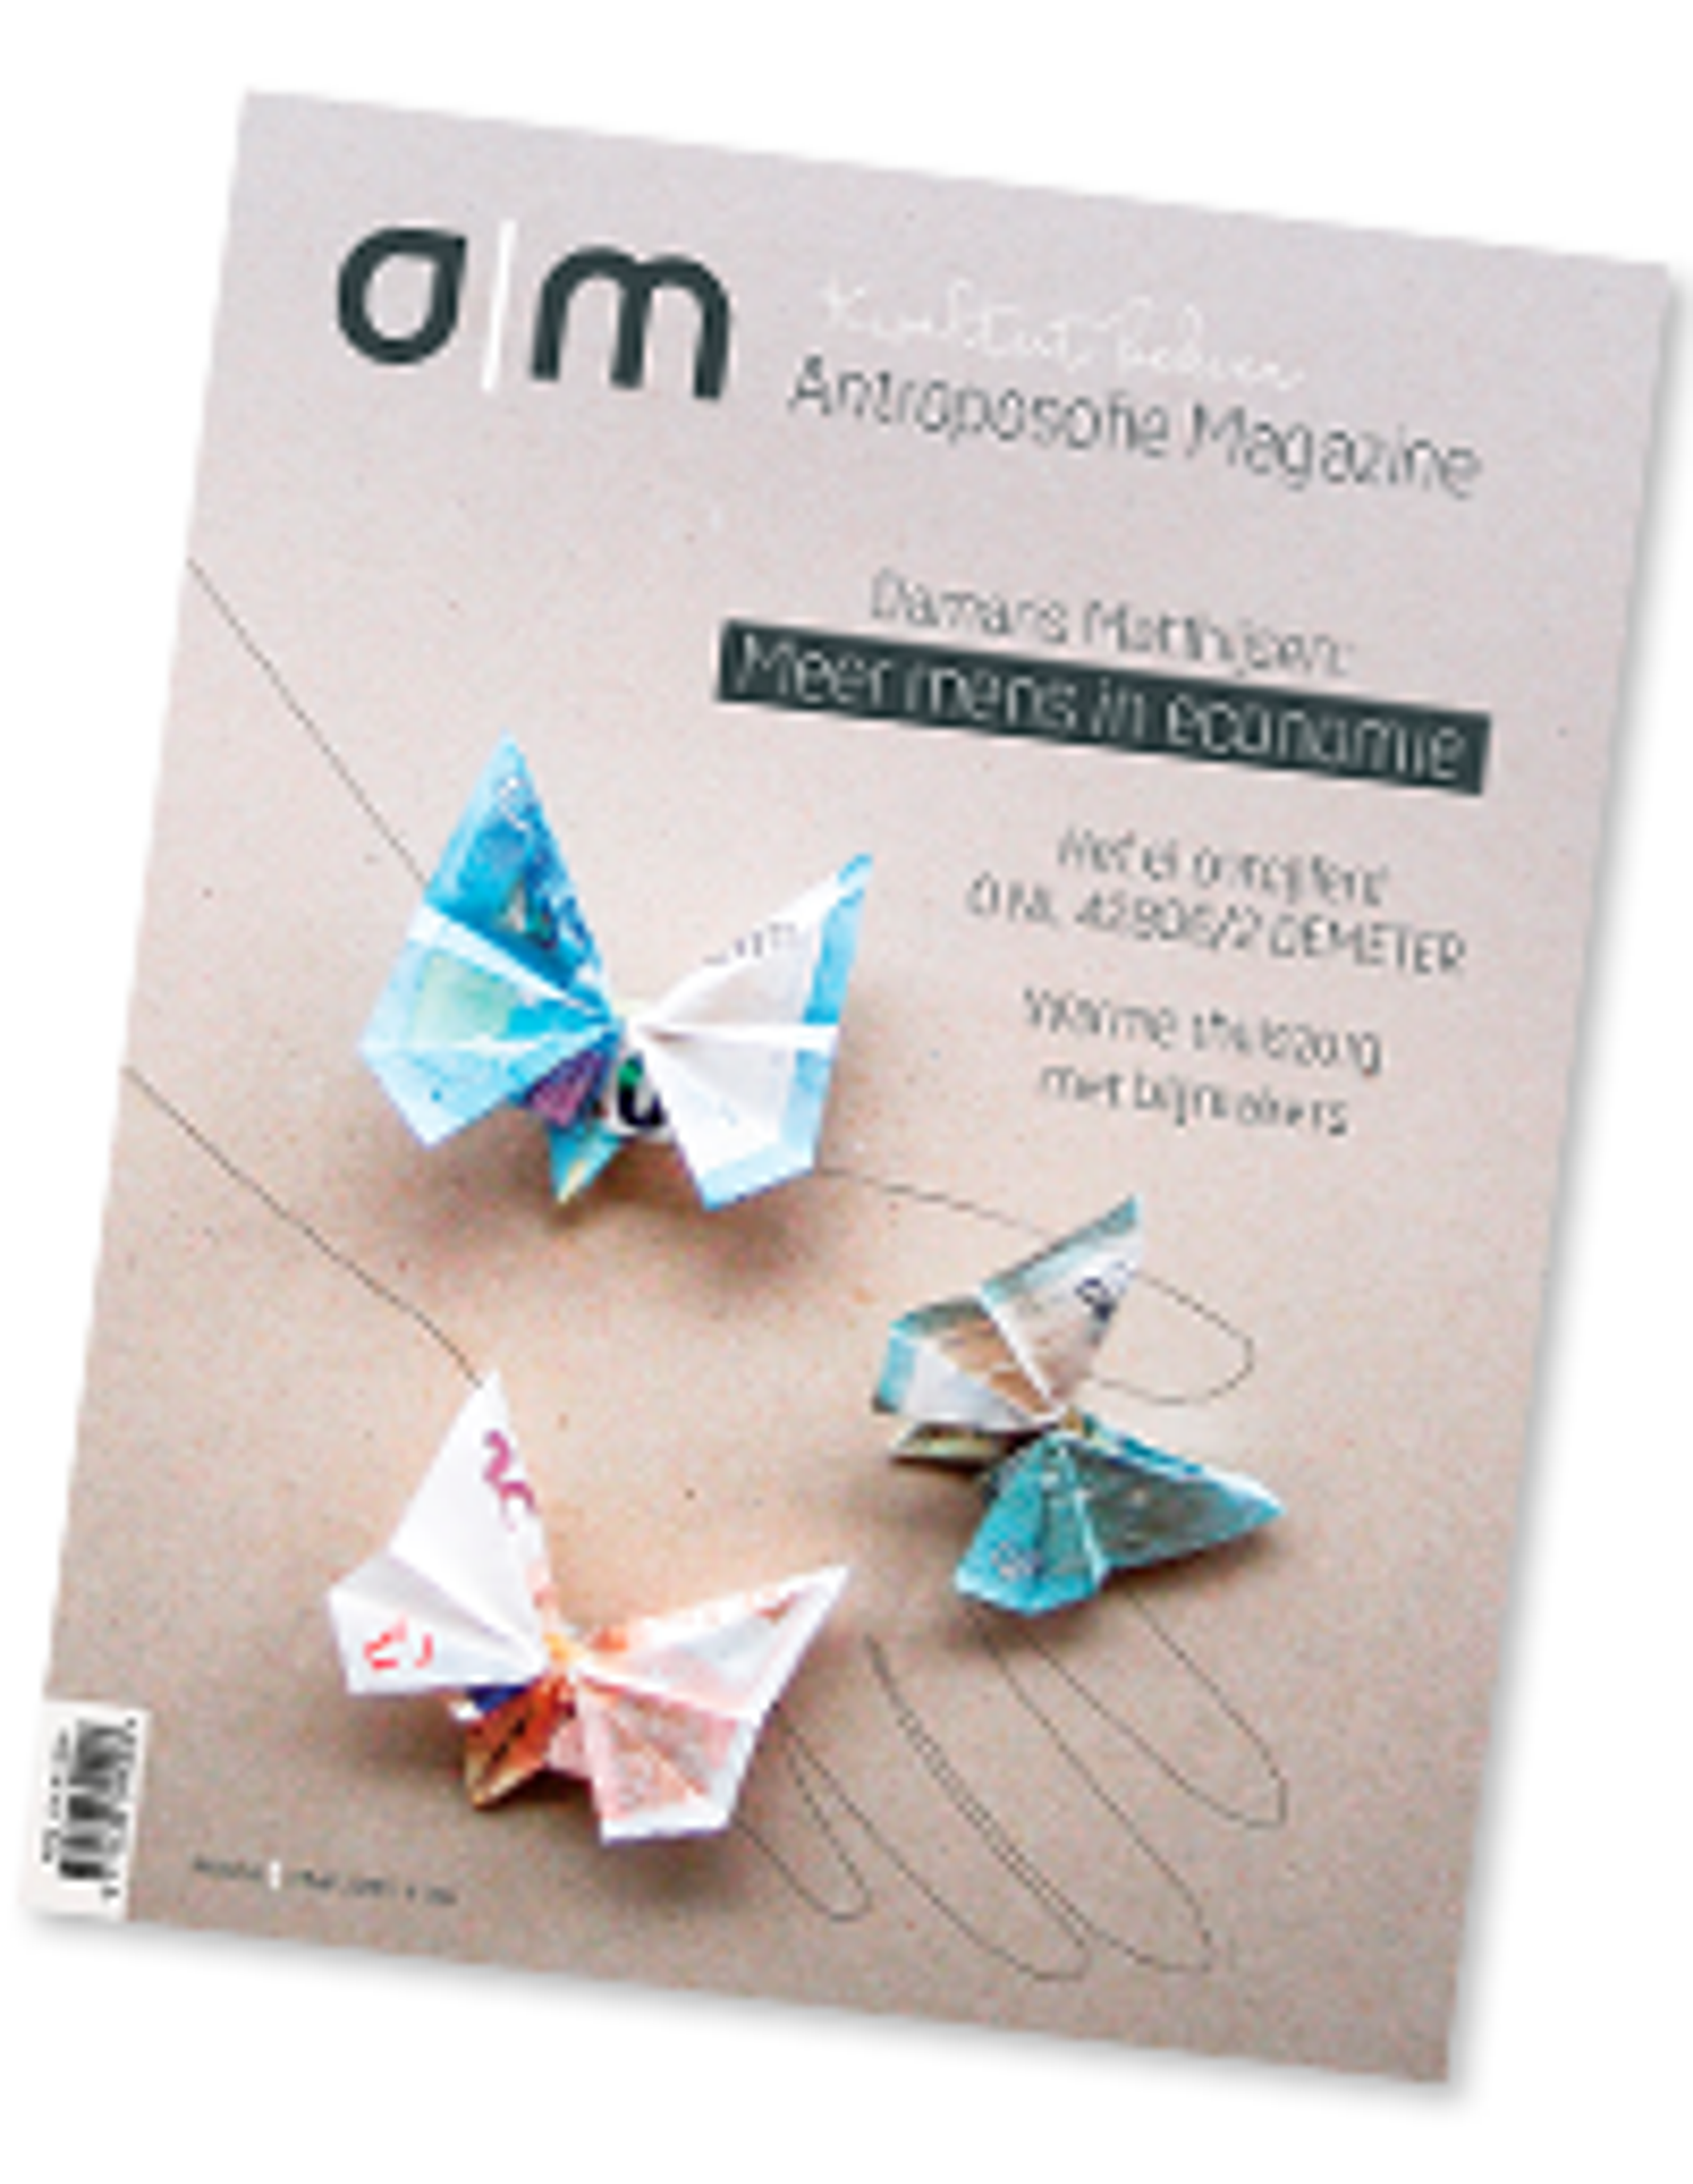 Nieuw kwartaalmagazine: Antroposofie Magazine